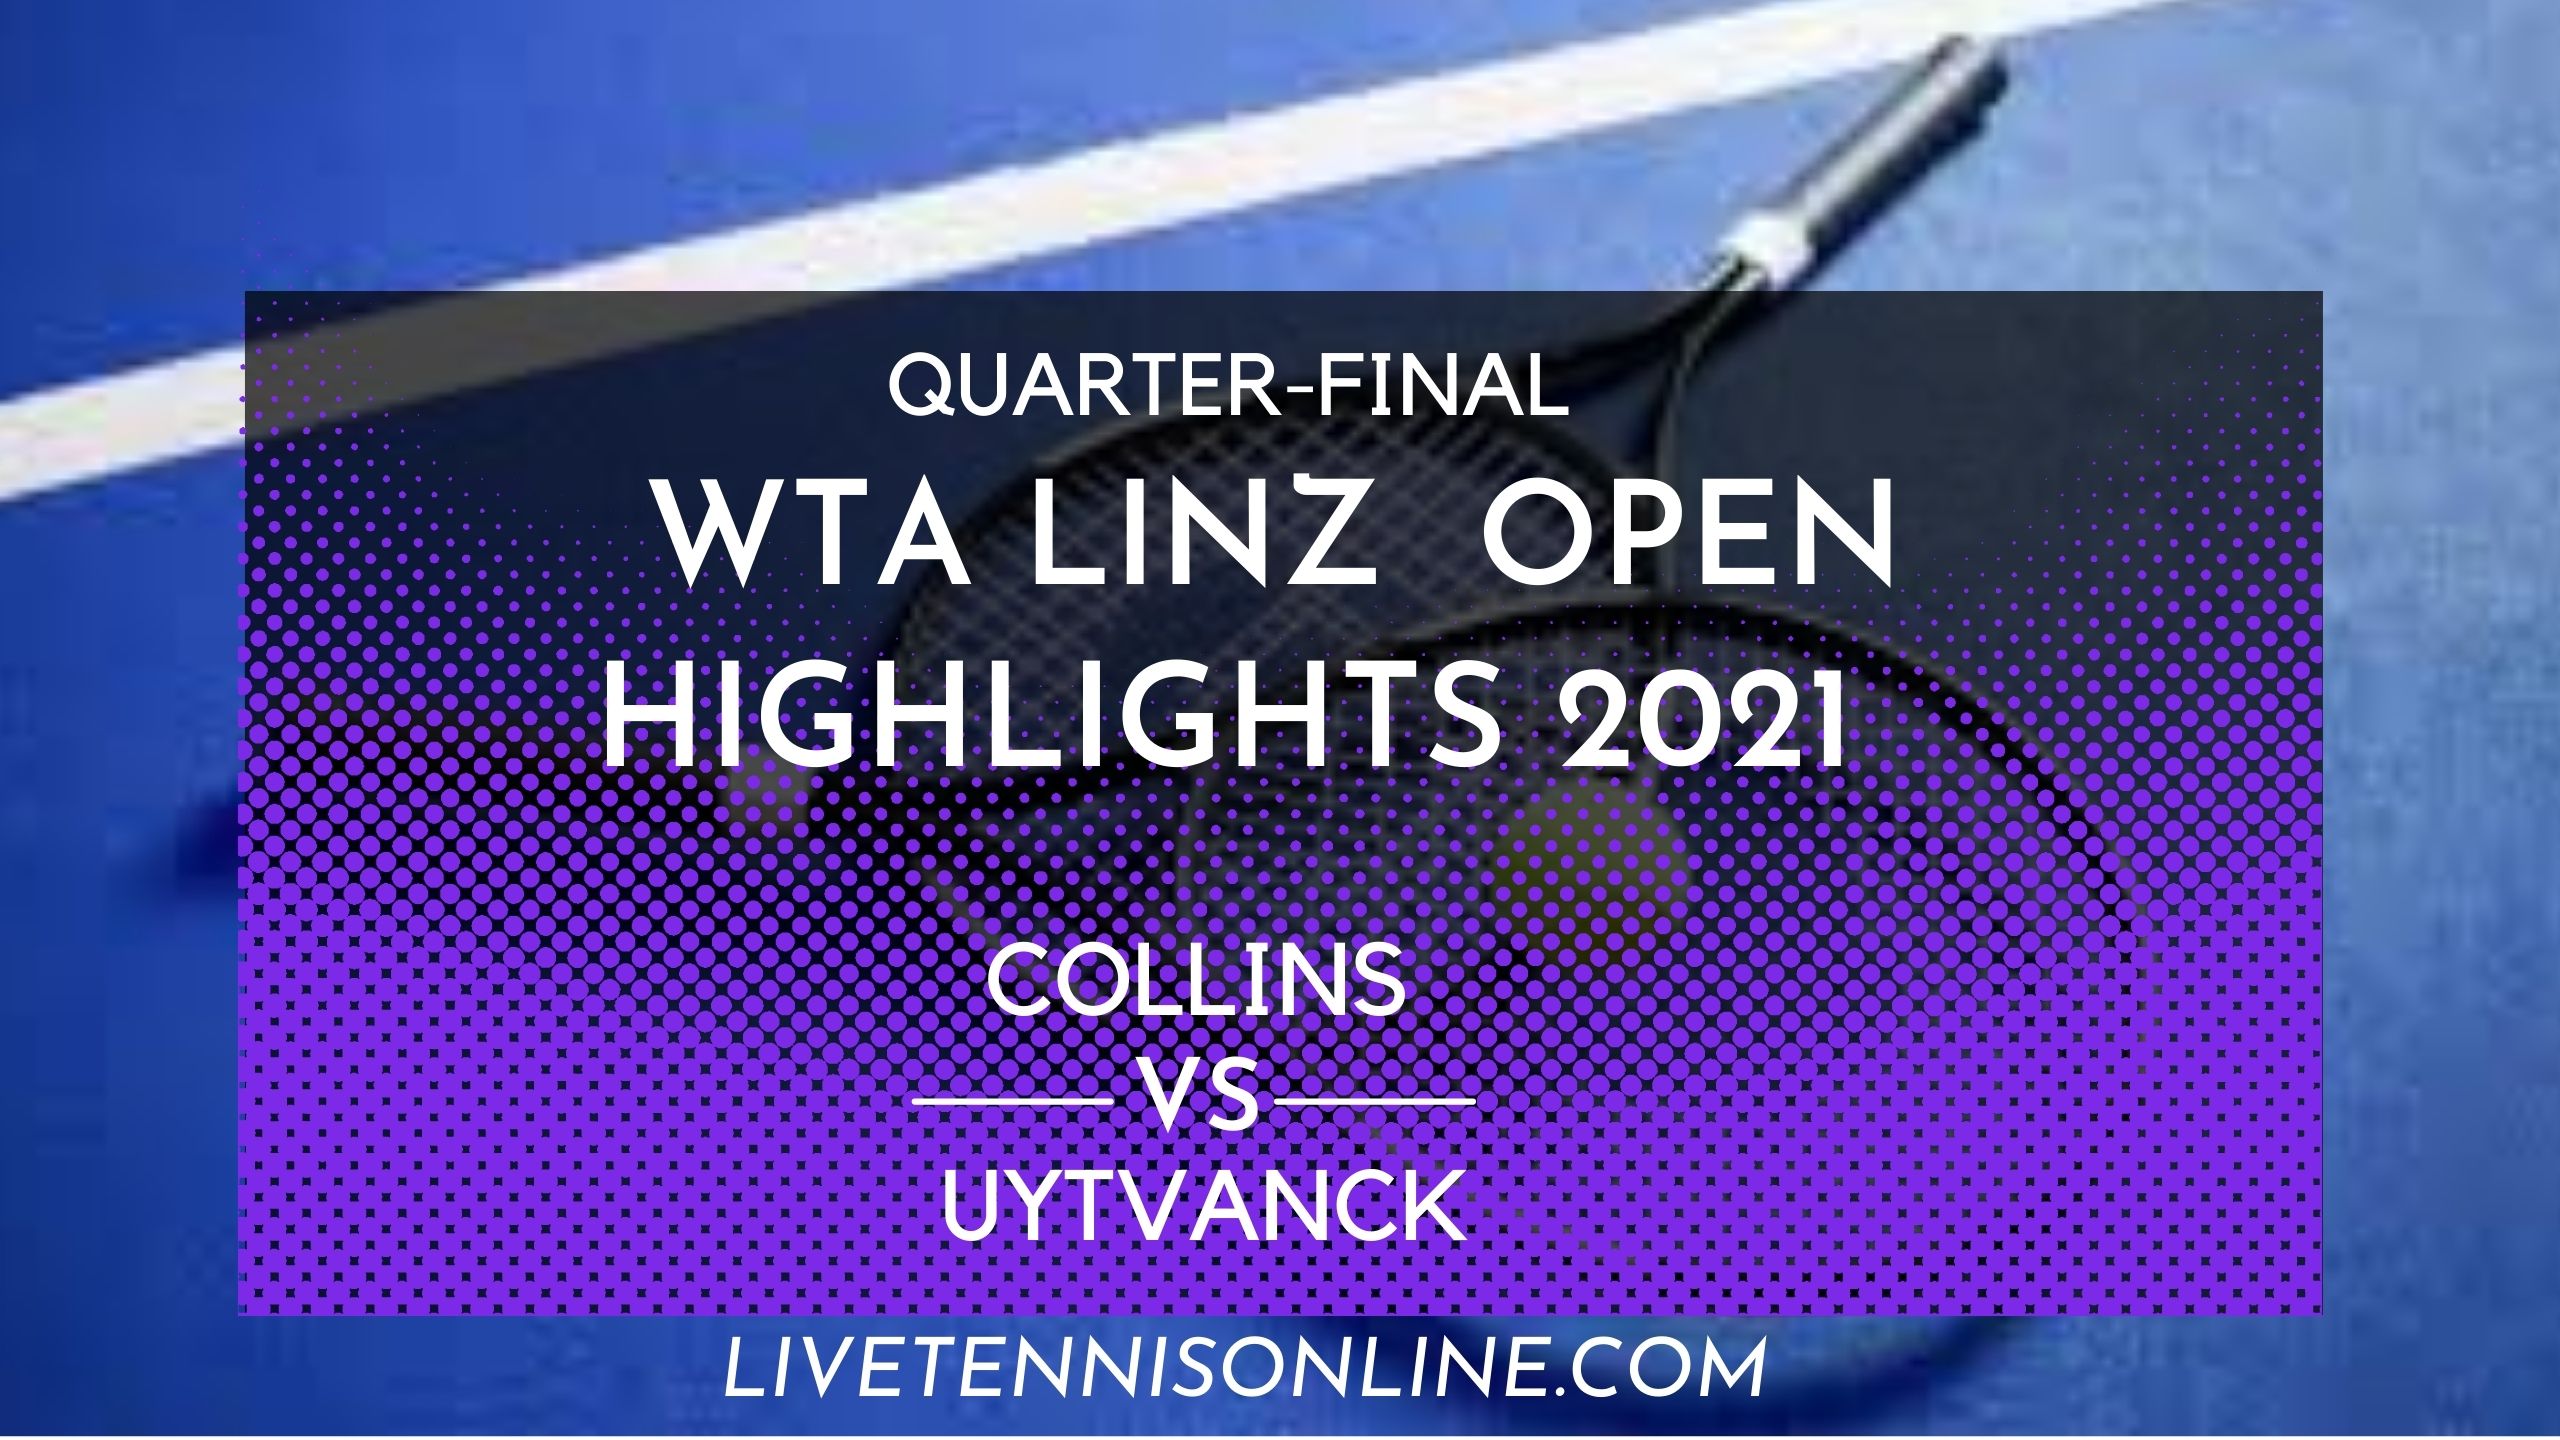 Collins Vs Uytvanck QF Highlights 2021 Linz Open